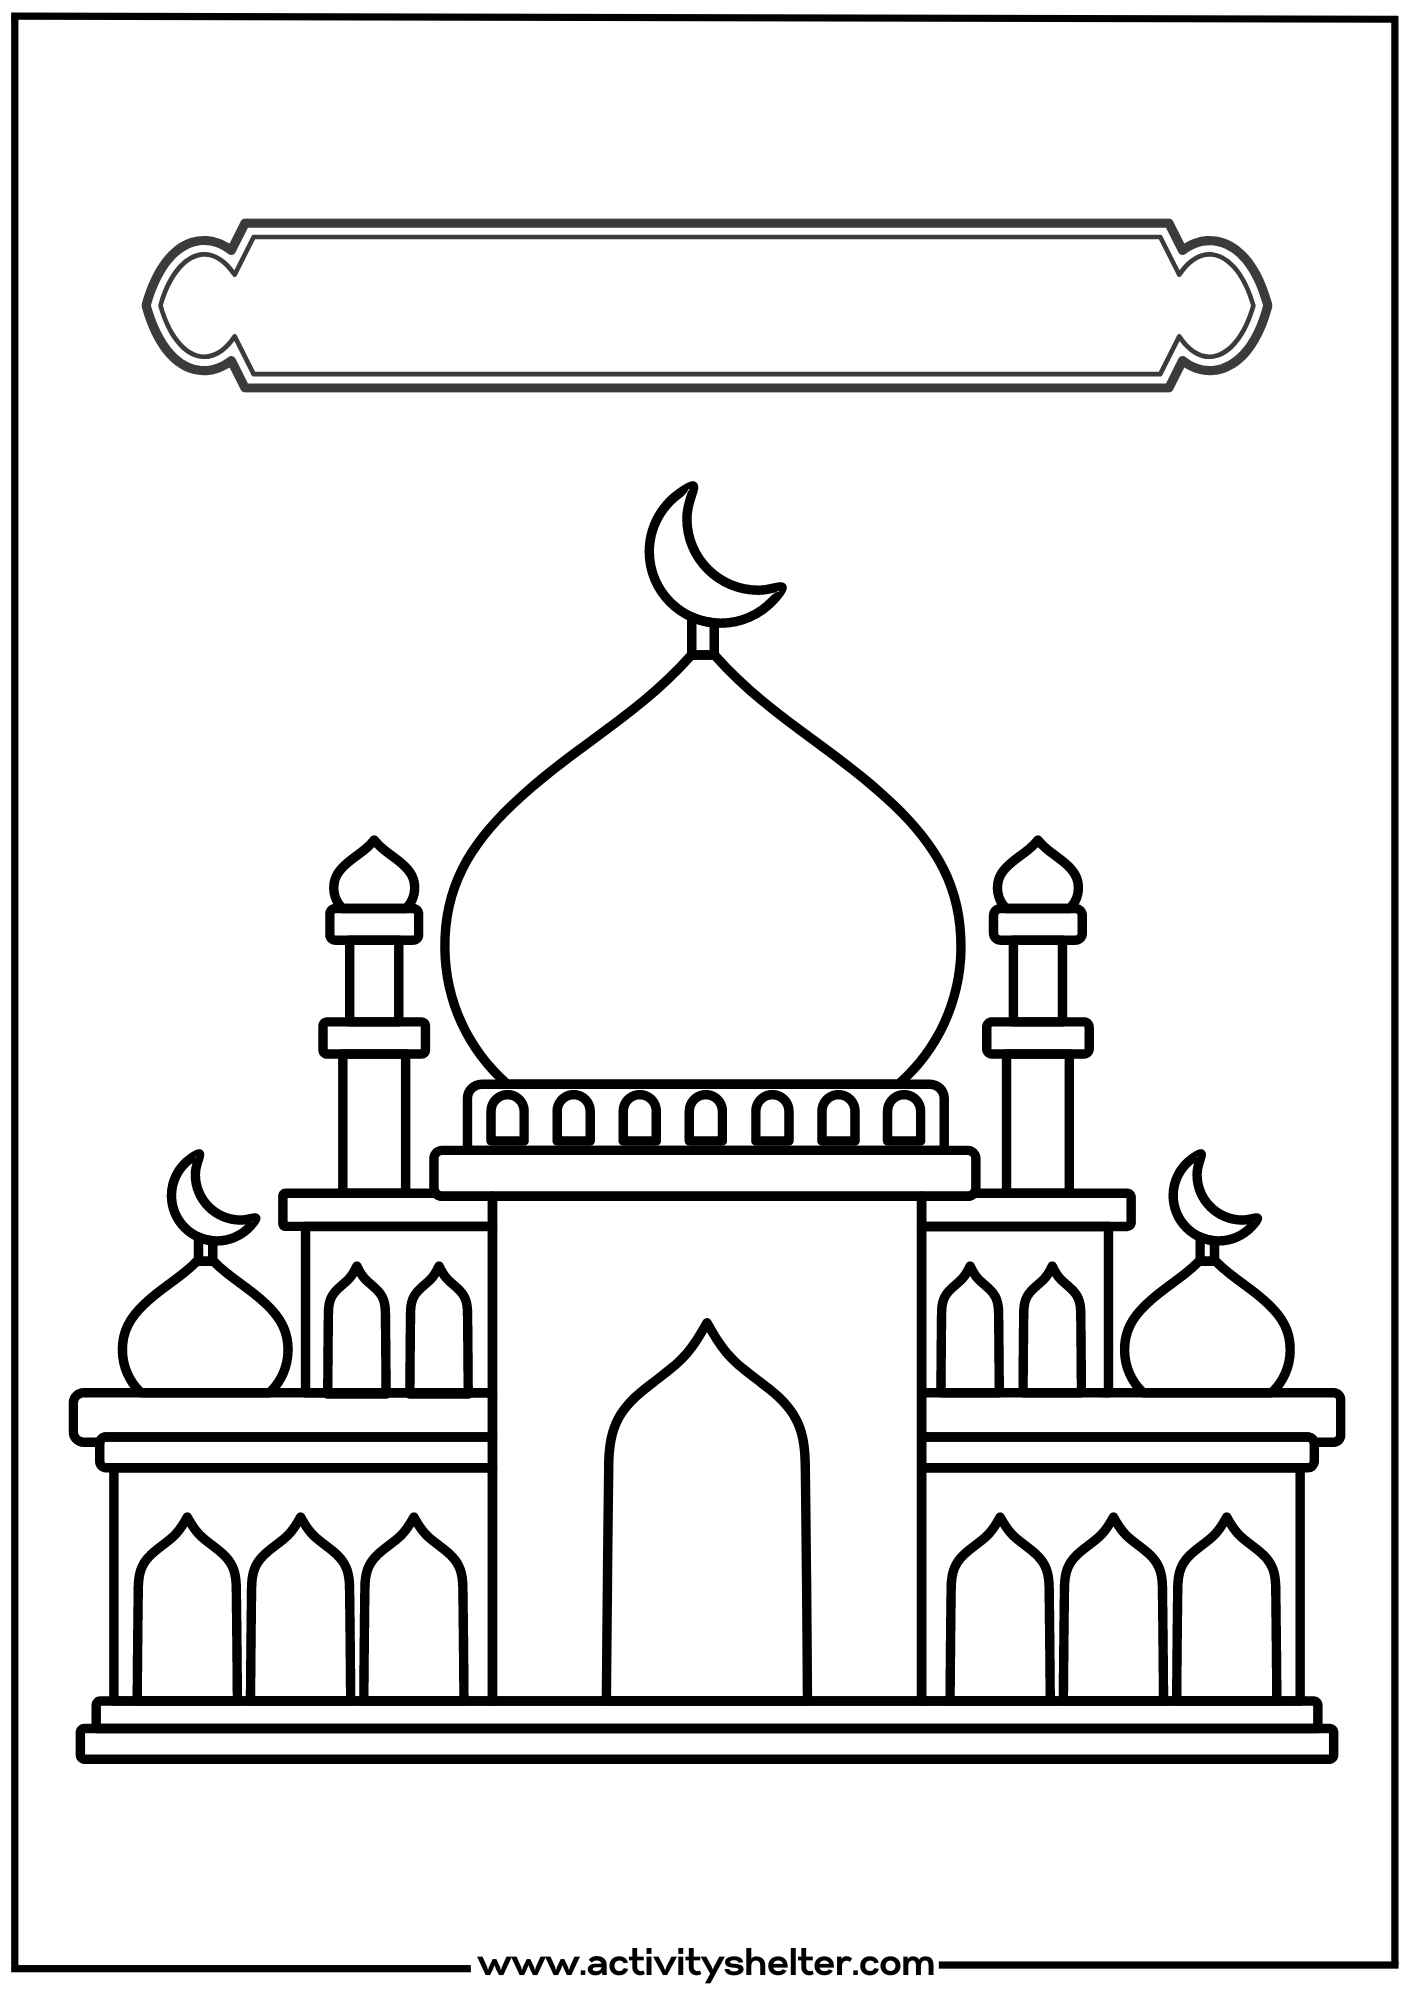 Ramadan Coloring Pages Printable